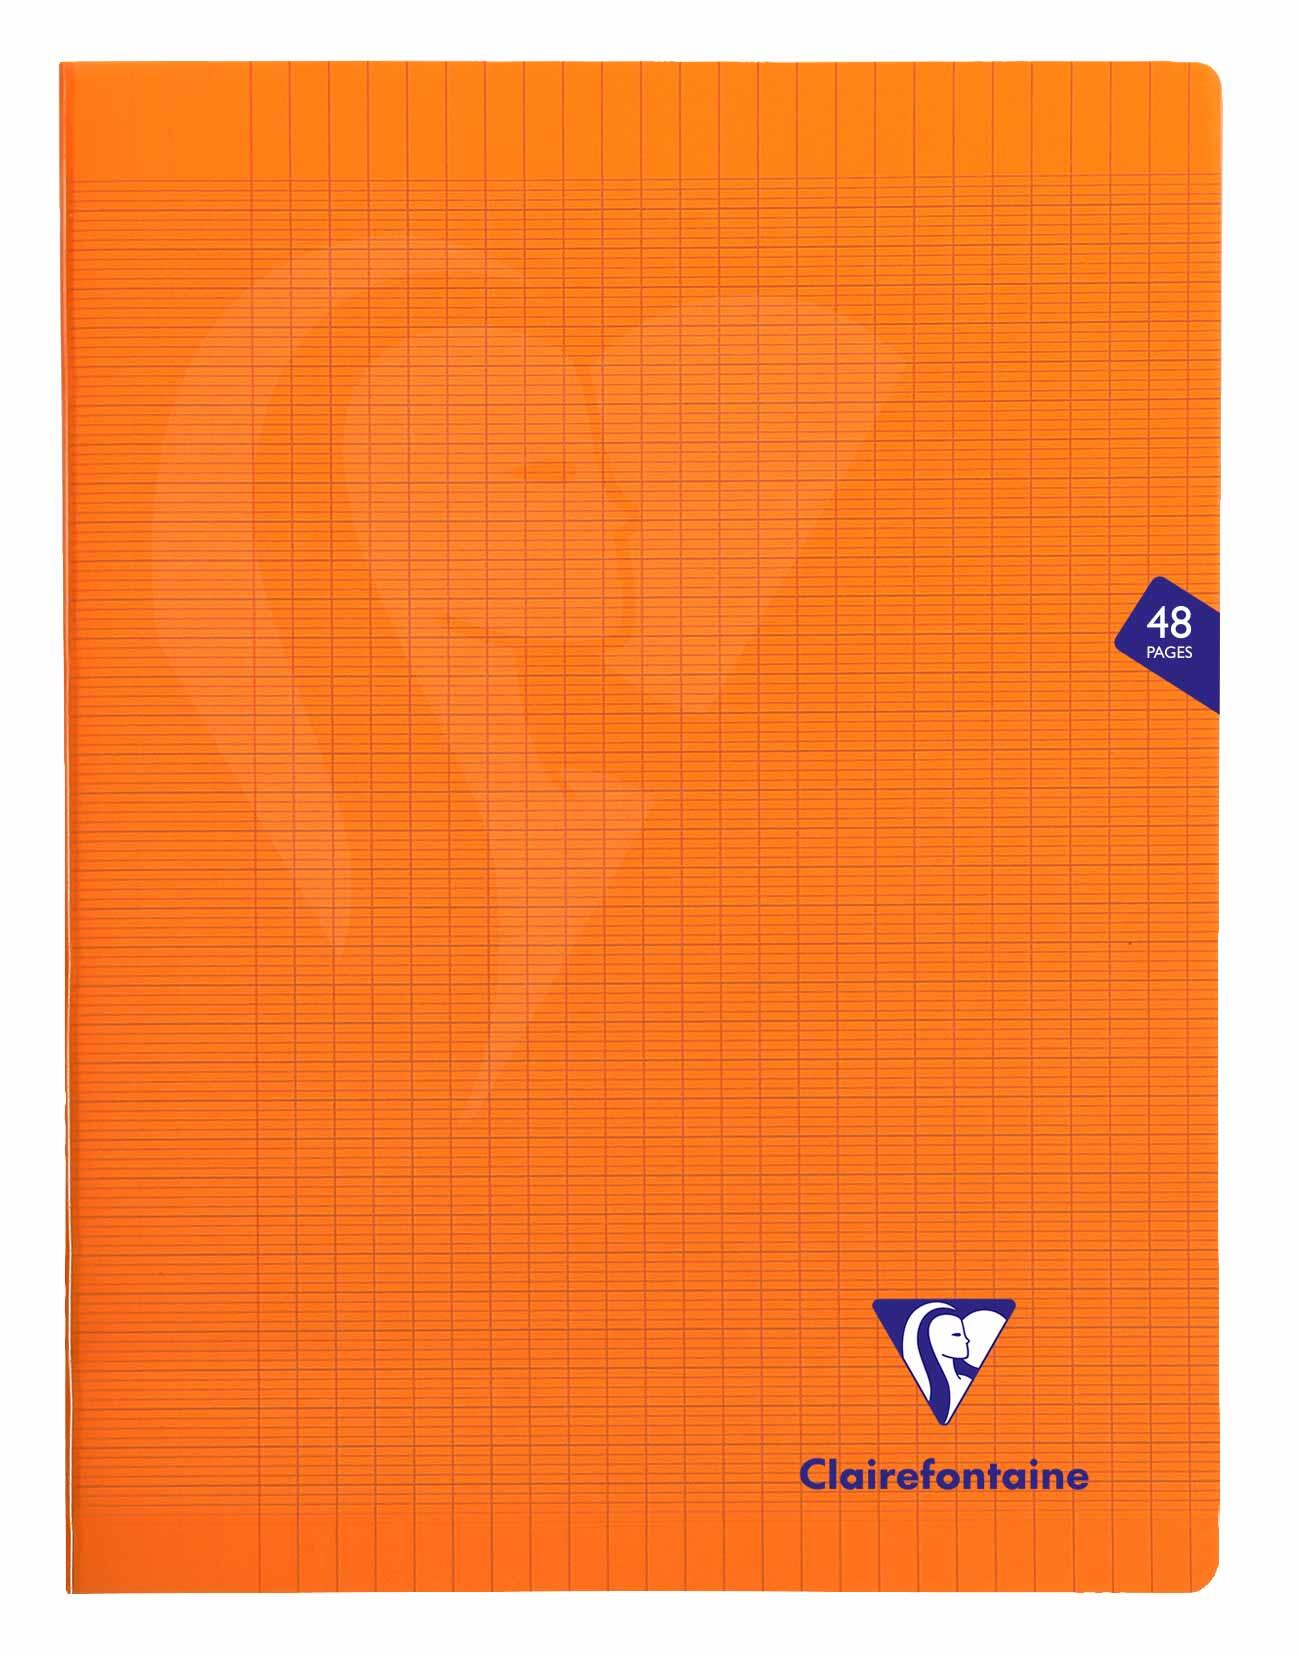 Piqure 24x32 - 90g - 48 p - Séyès - couverture polypro orange - MIMESYS